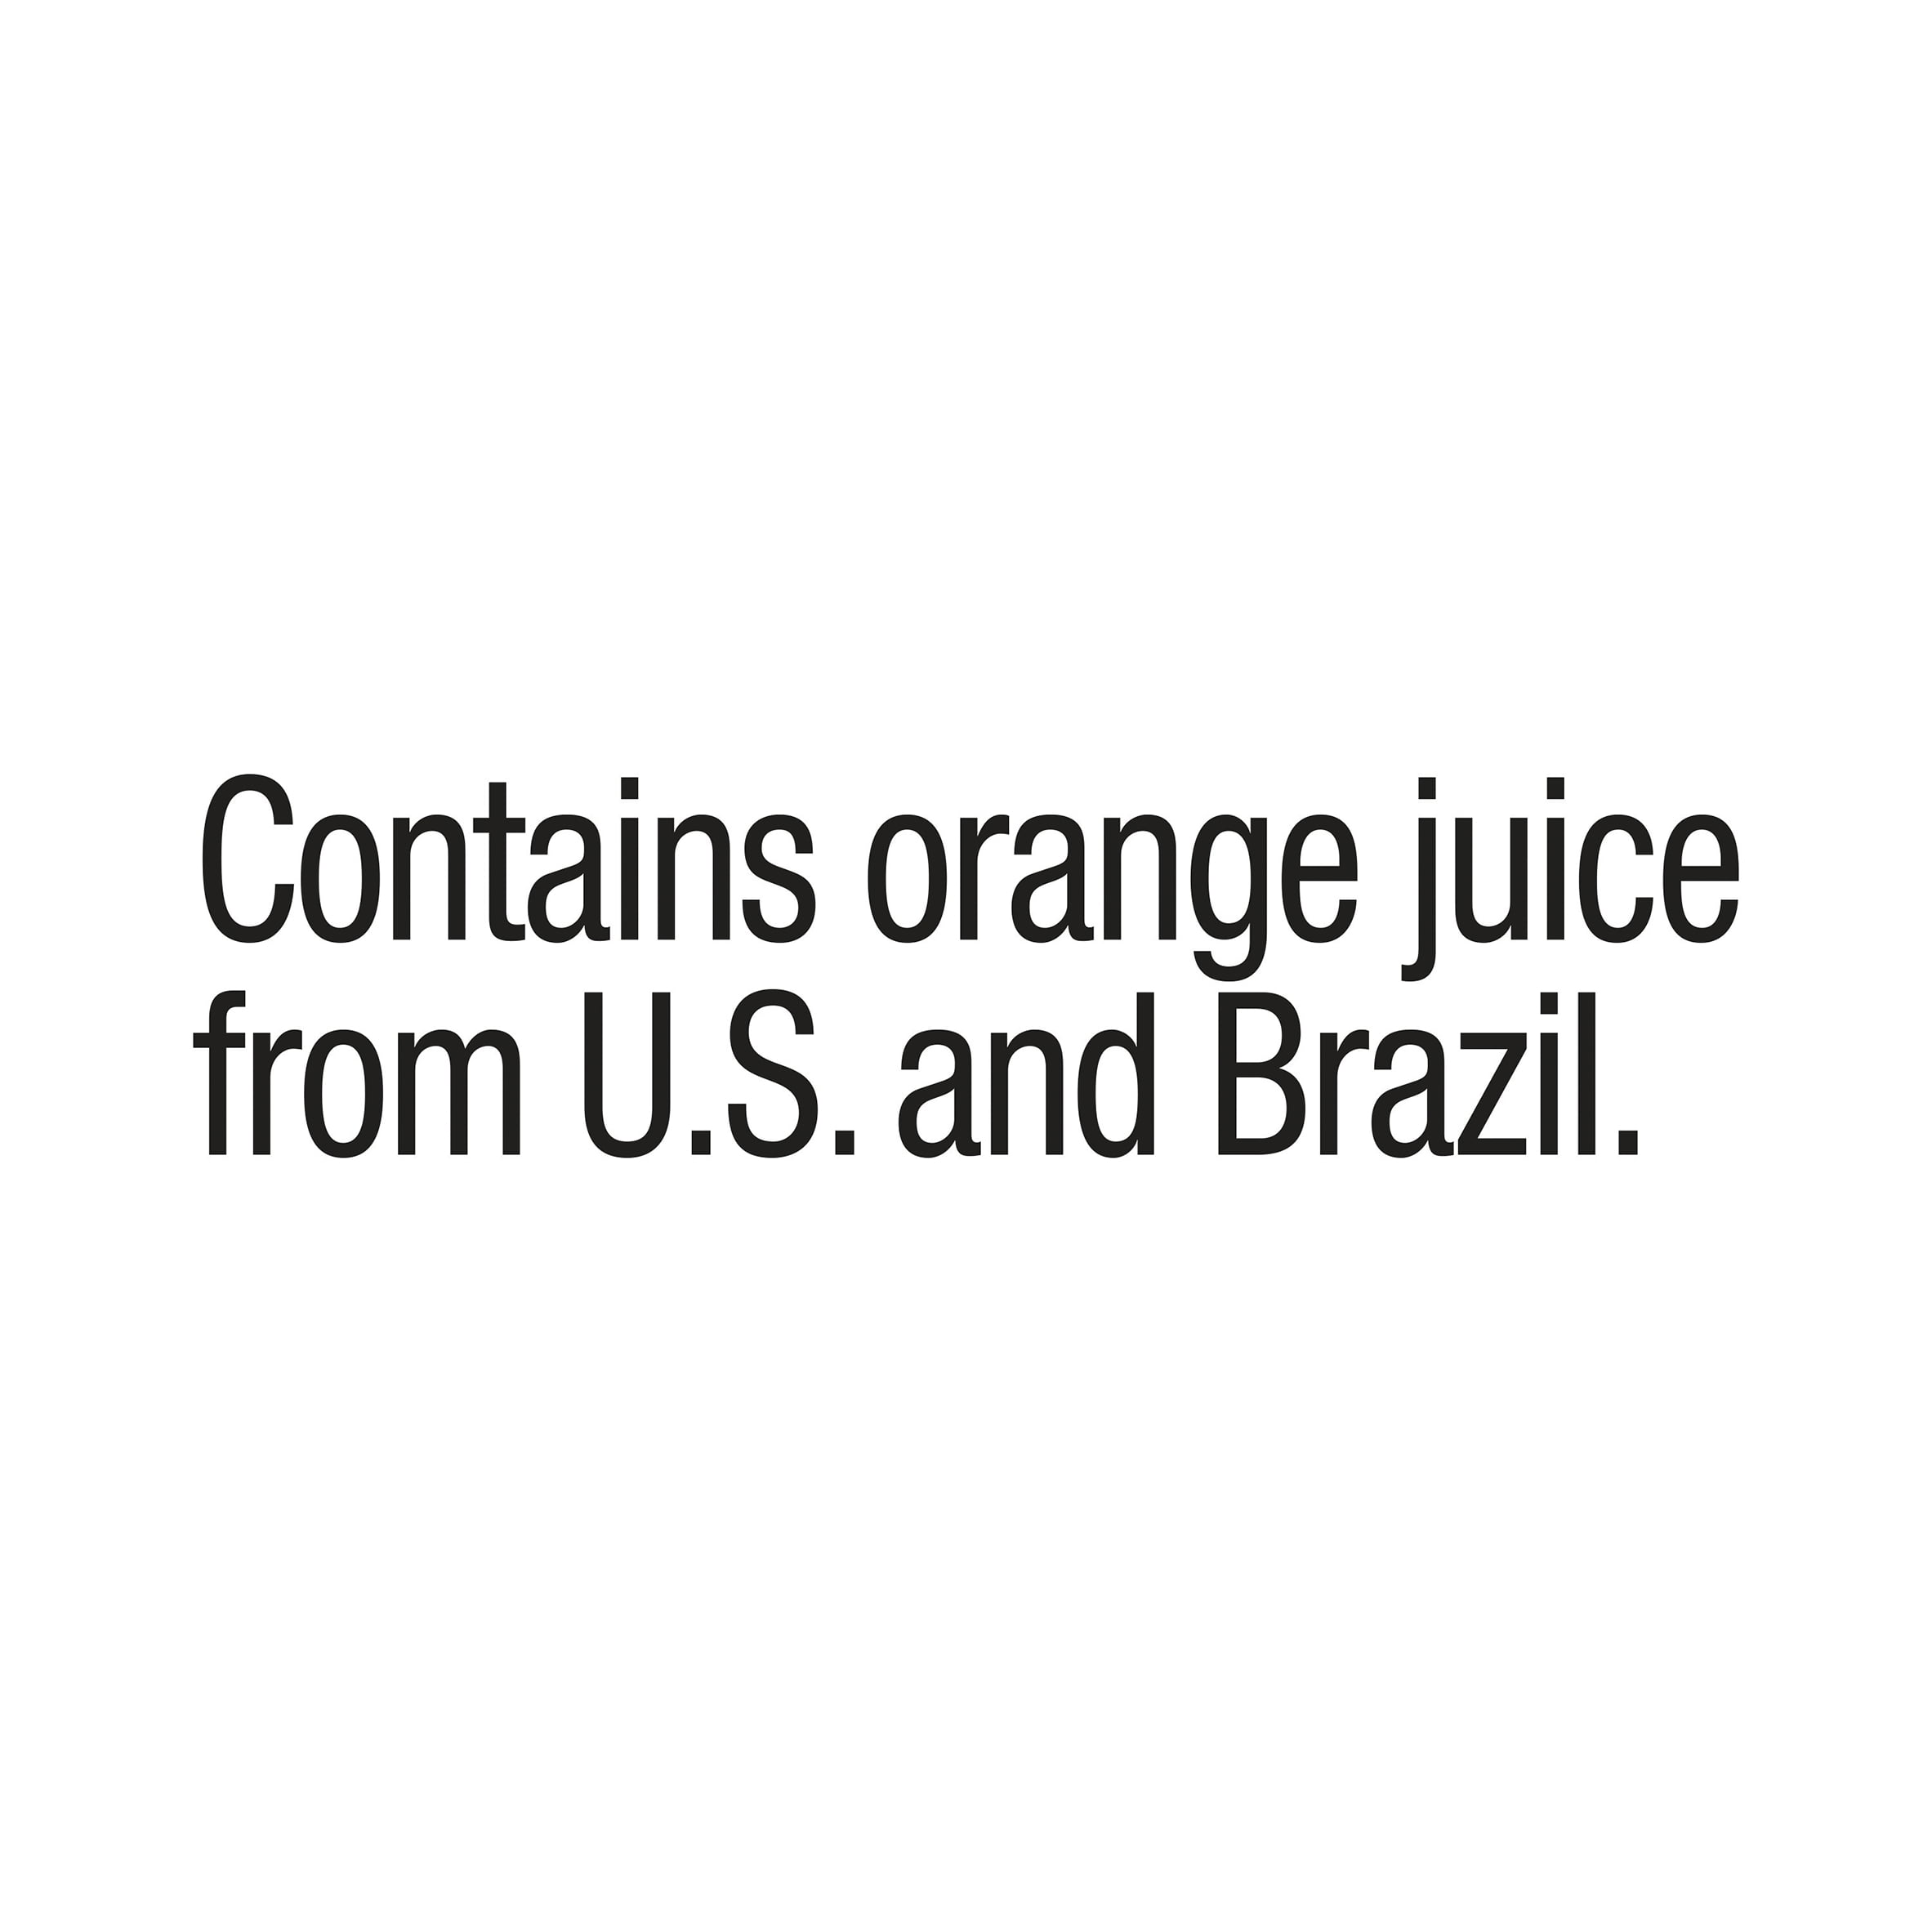 Tropicana® No Pulp Pure Premium Orange Juice 12 fl. oz. - 12/Case